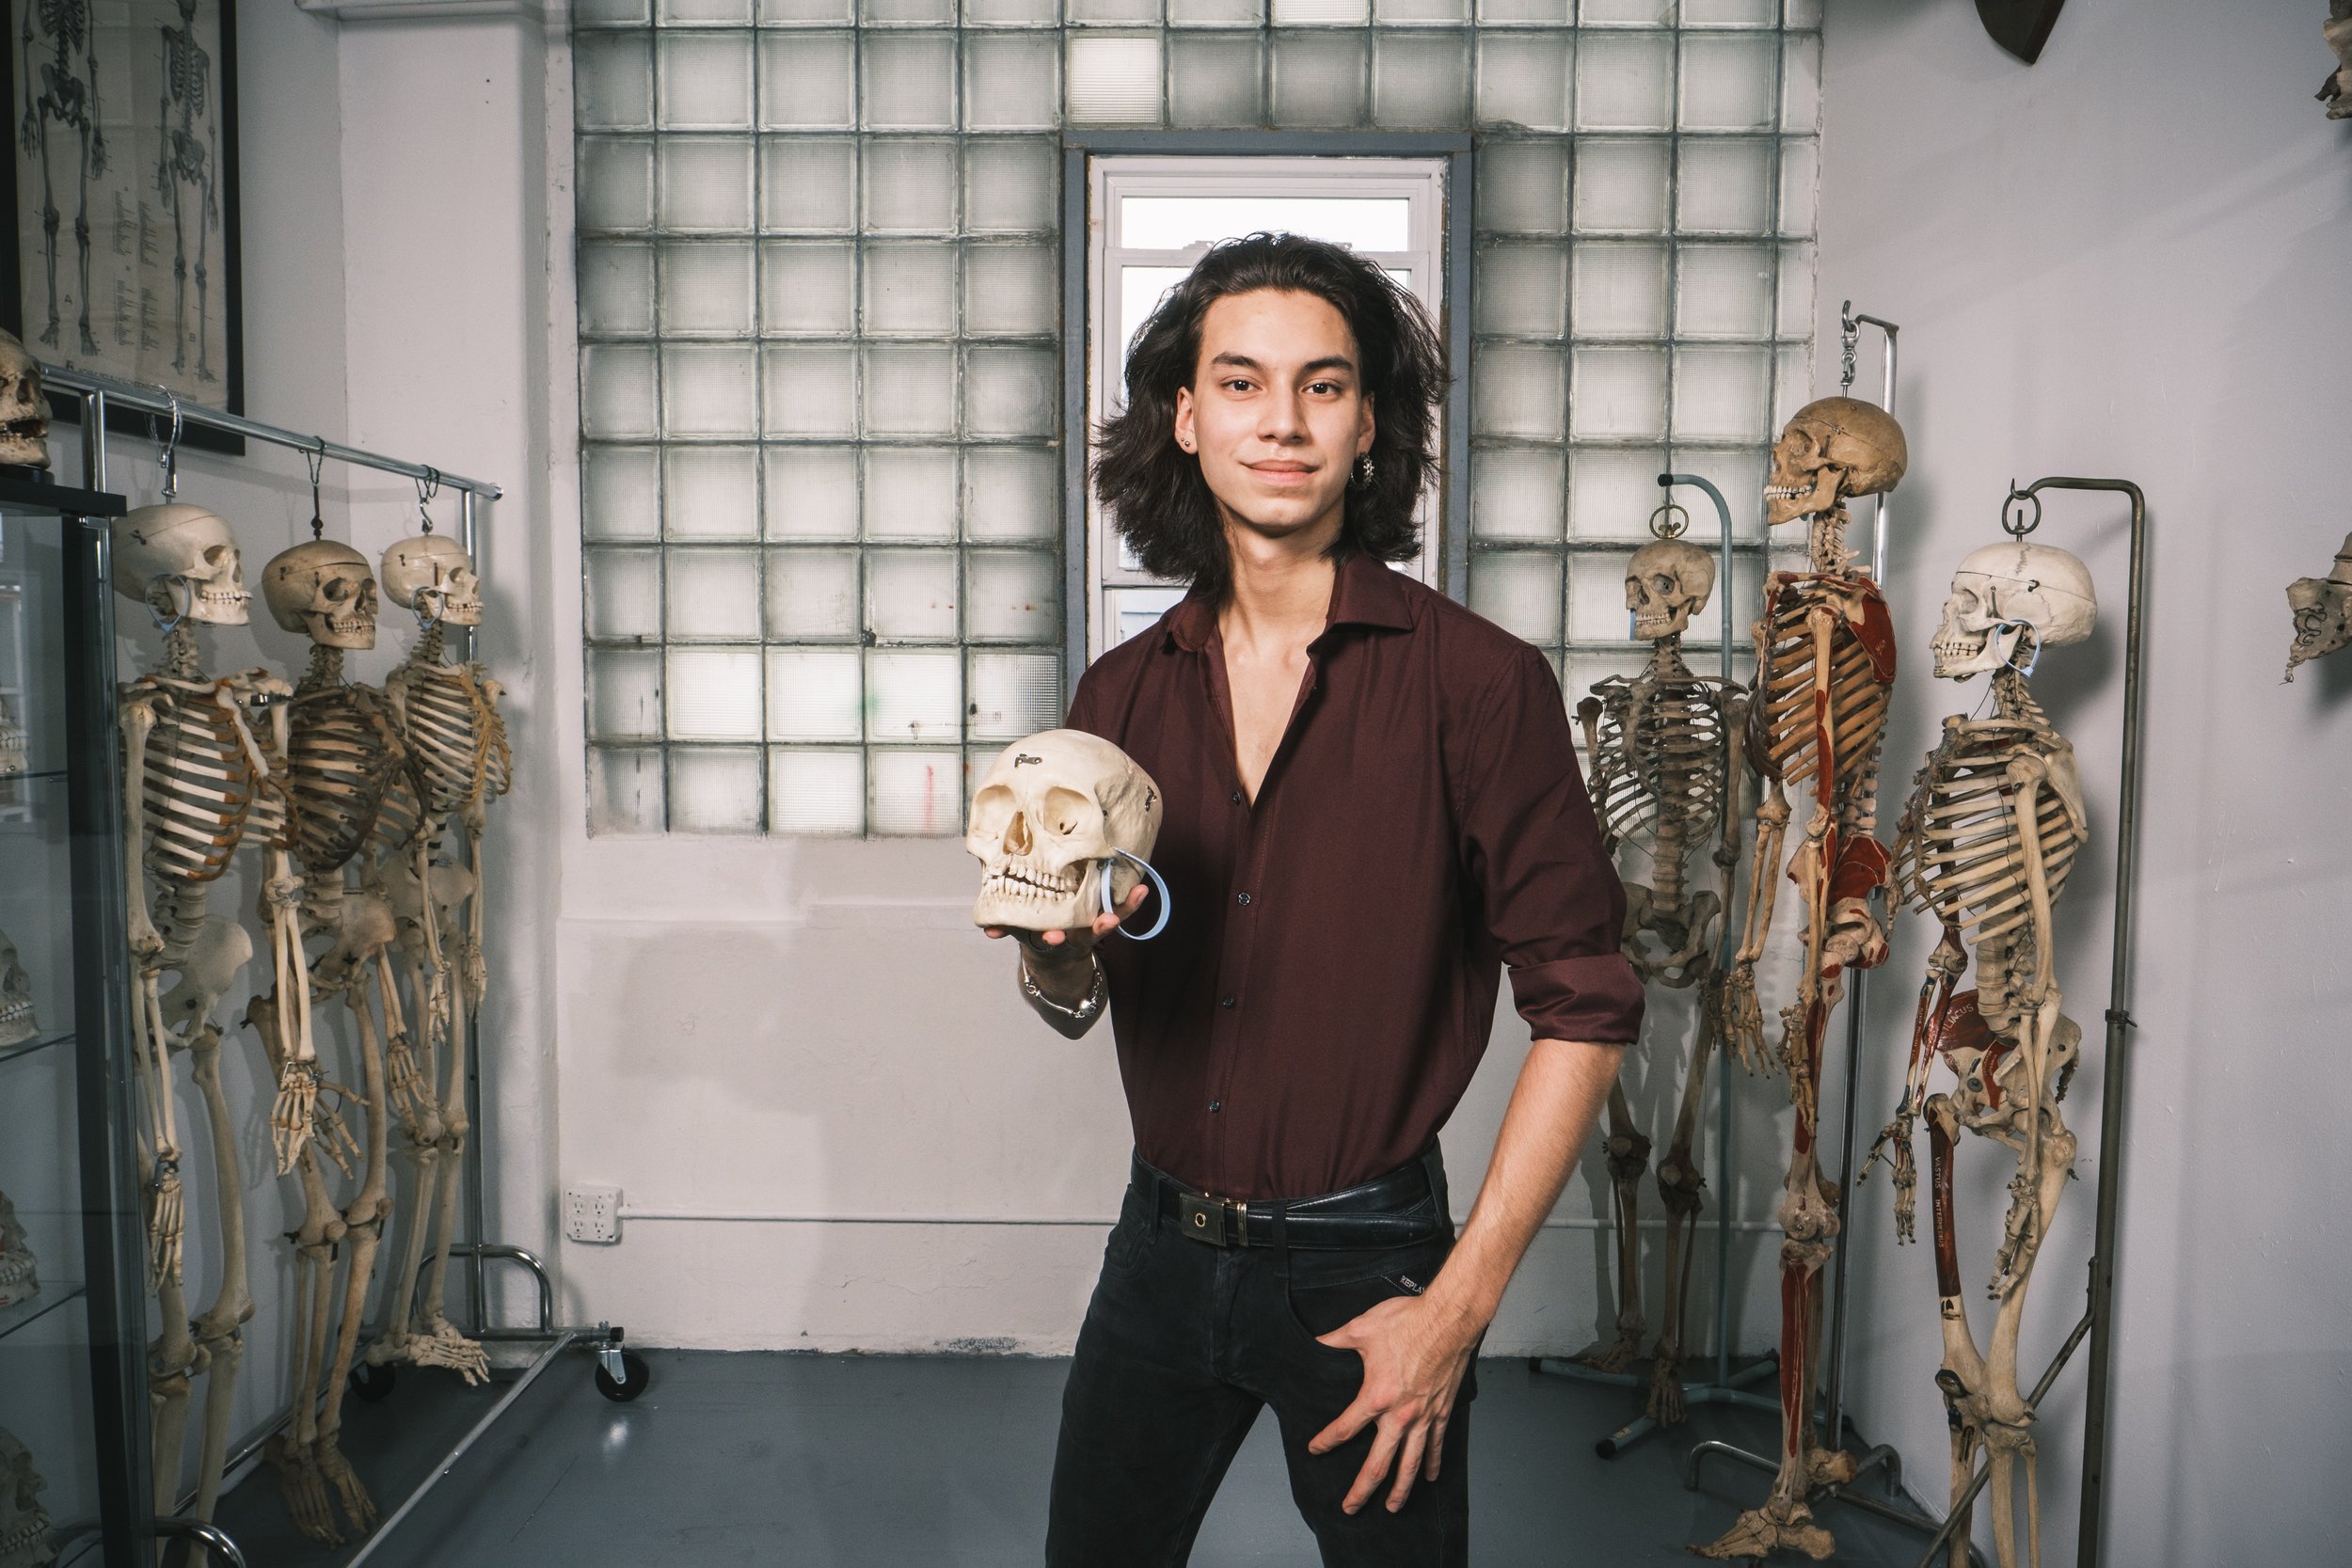  Jon Ferry, bone collector 